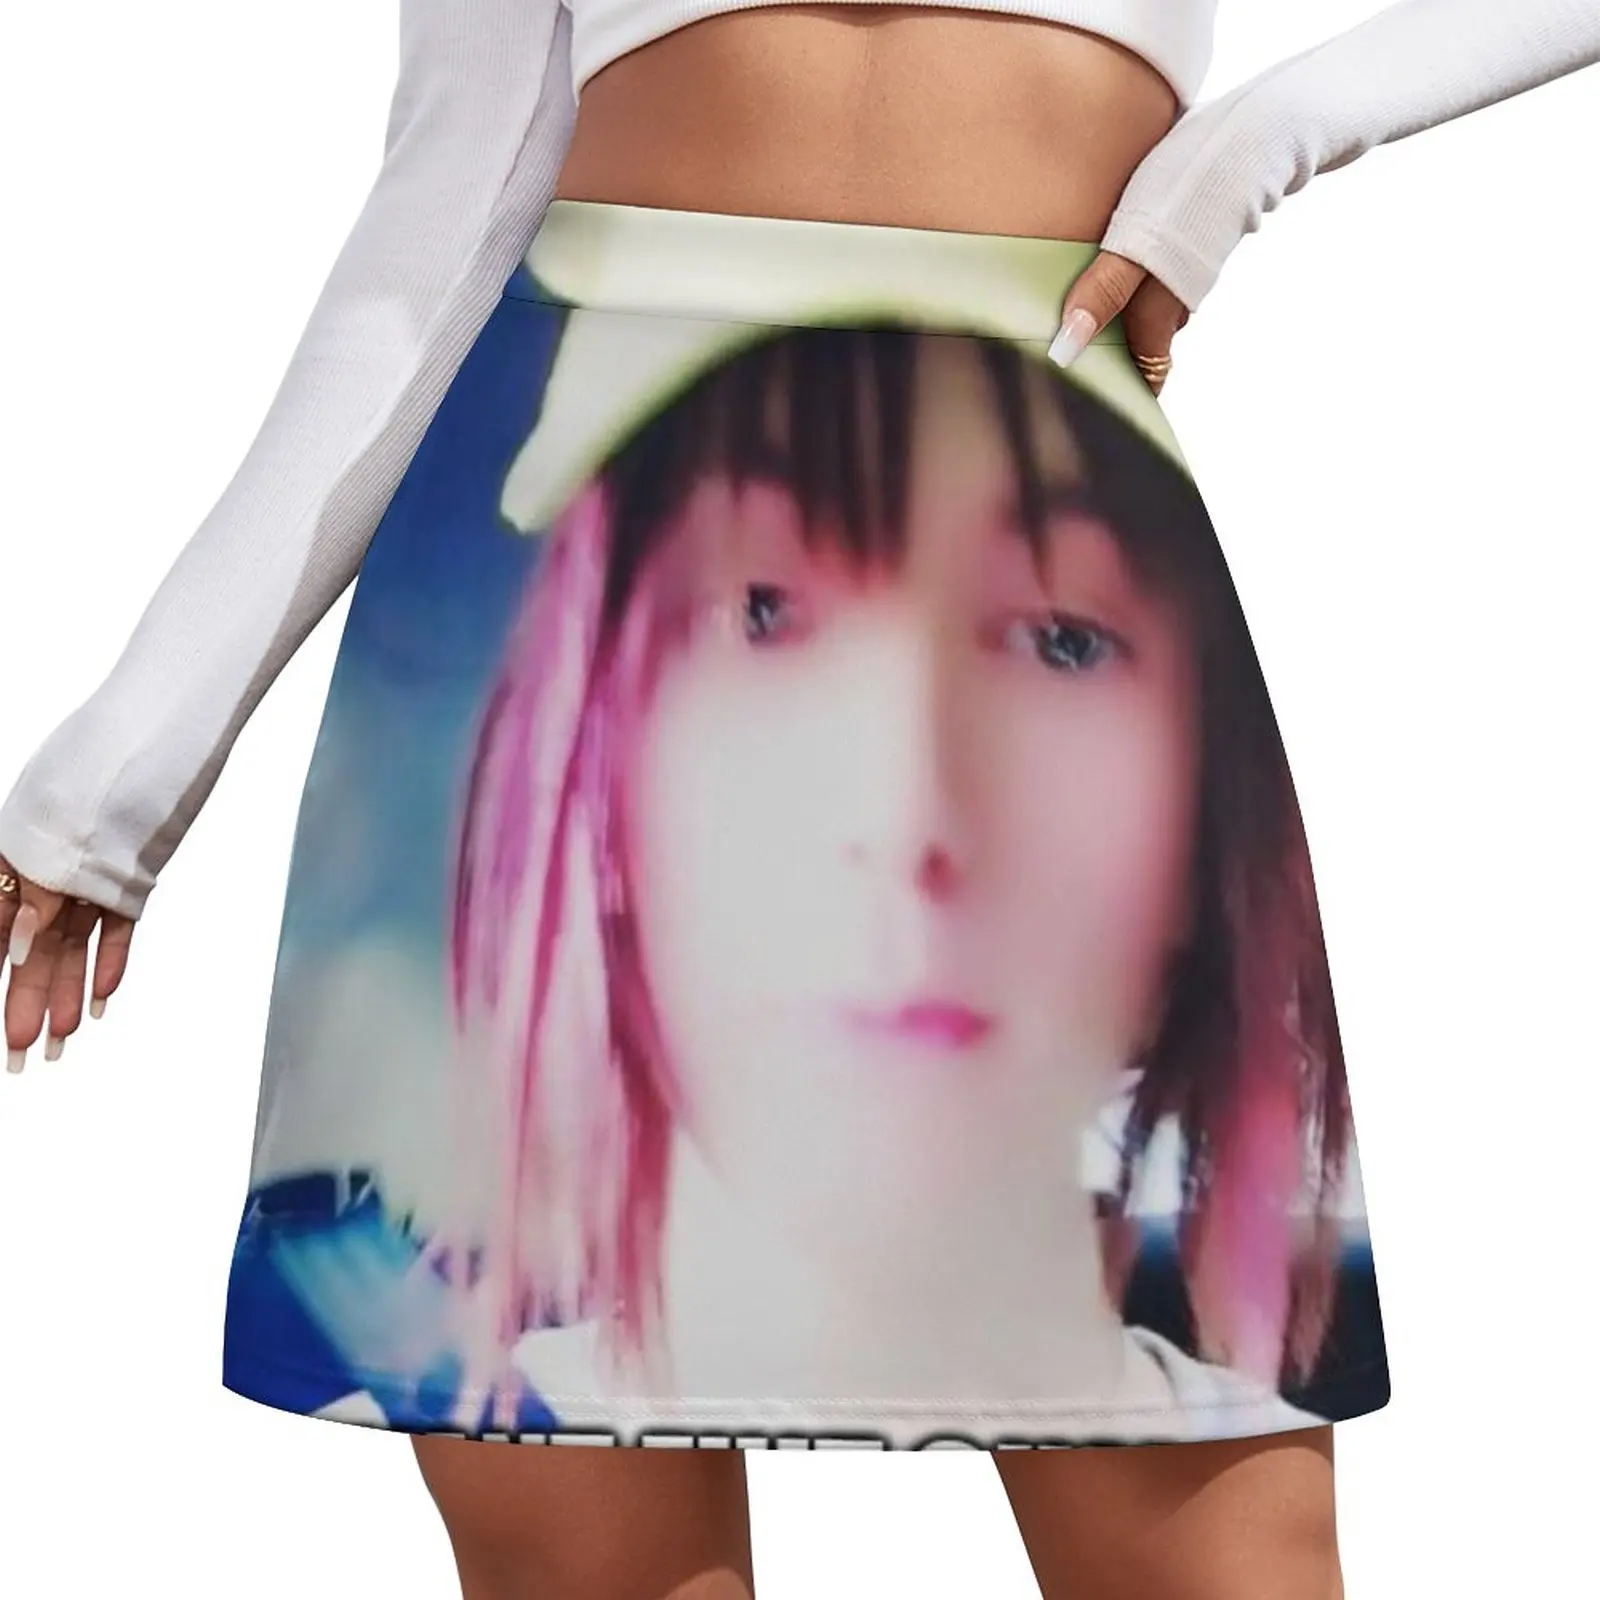 Drain Gang Bladee I want Fuit Gummy Meme Shirt Mini Skirt skirts for women 2023 women's clothing korea stylish marvin gaye – i want you 1 cd